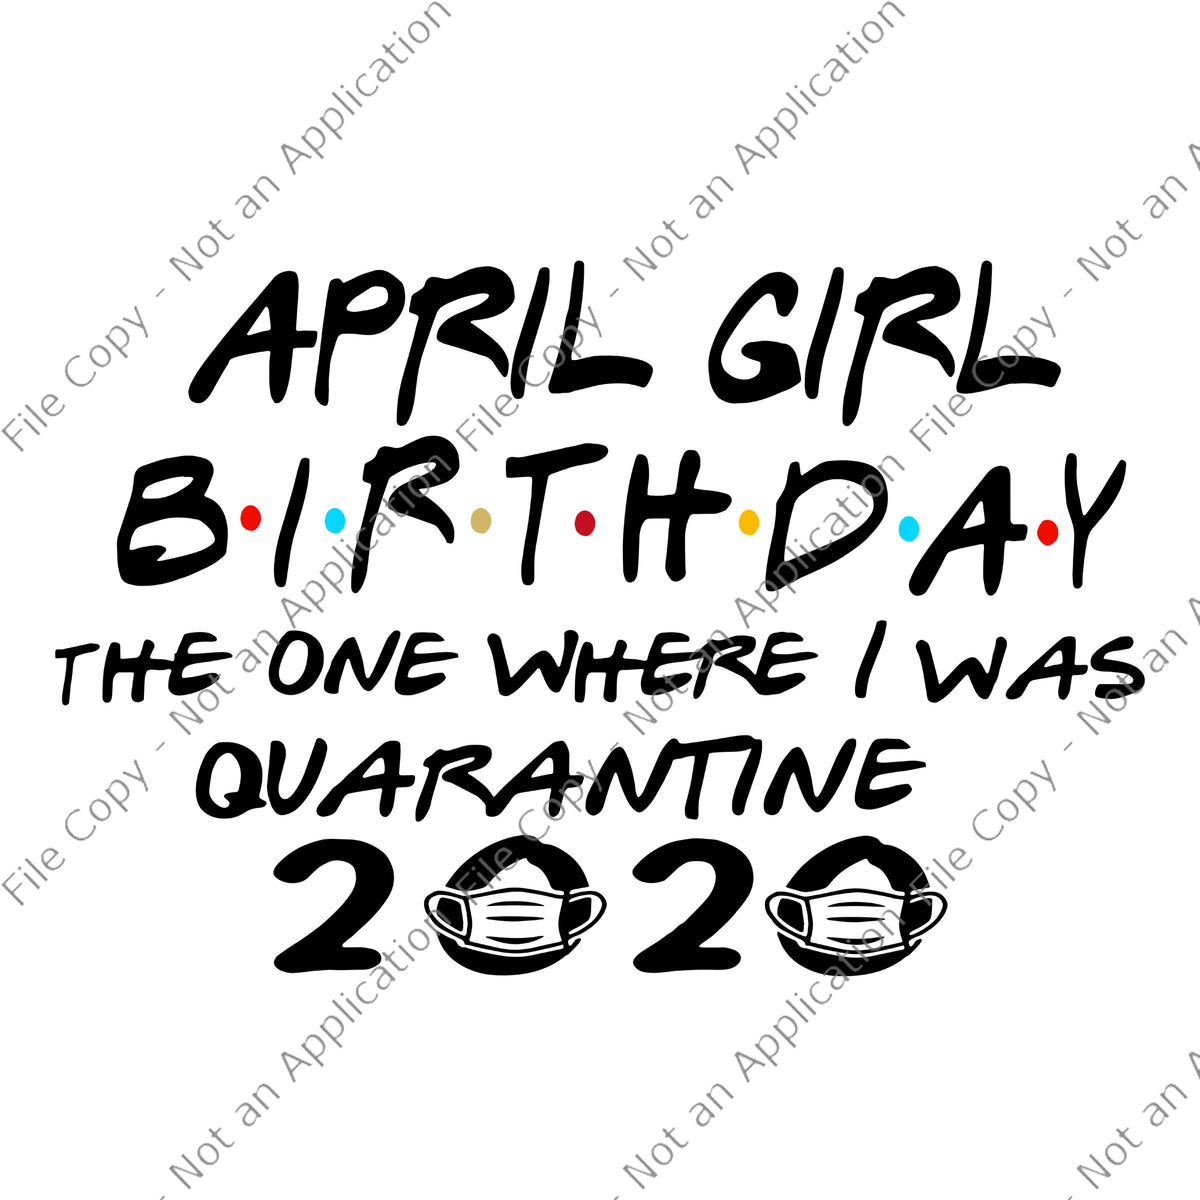 April girl birthday svg, April girl birthday the one where i was quara ...